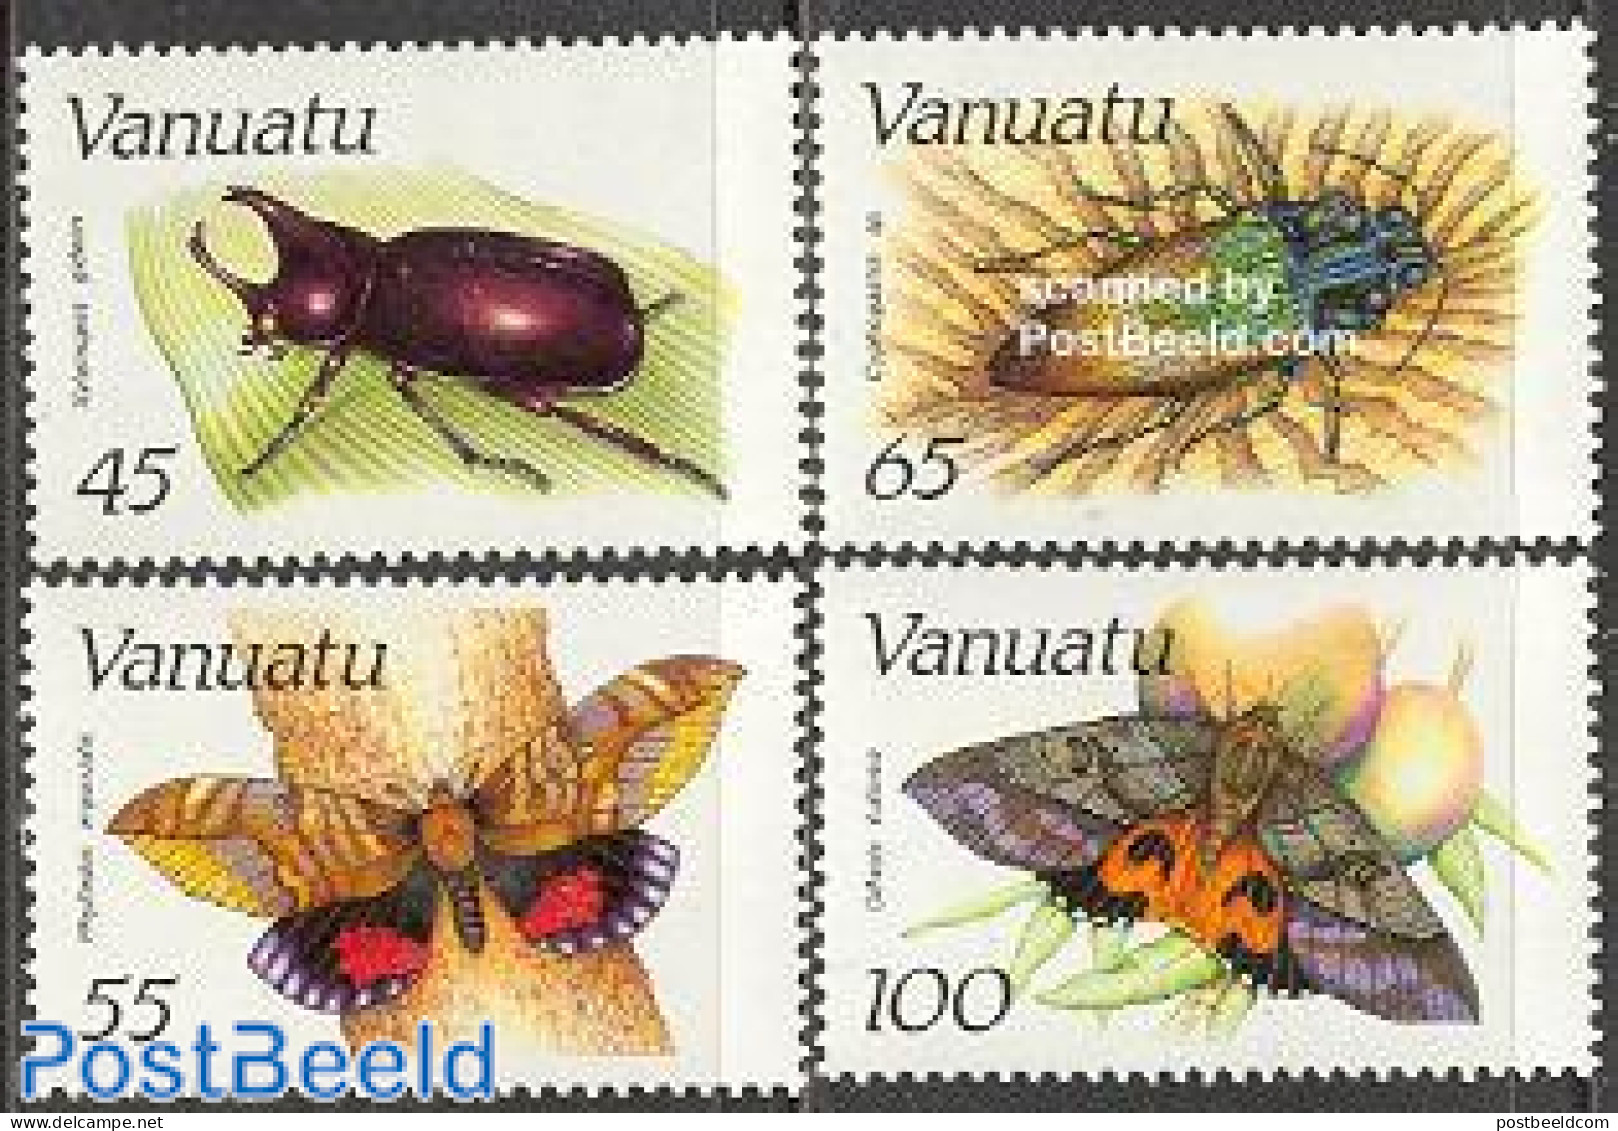 Vanuatu 1987 Insects 4v, Mint NH, Nature - Butterflies - Insects - Vanuatu (1980-...)